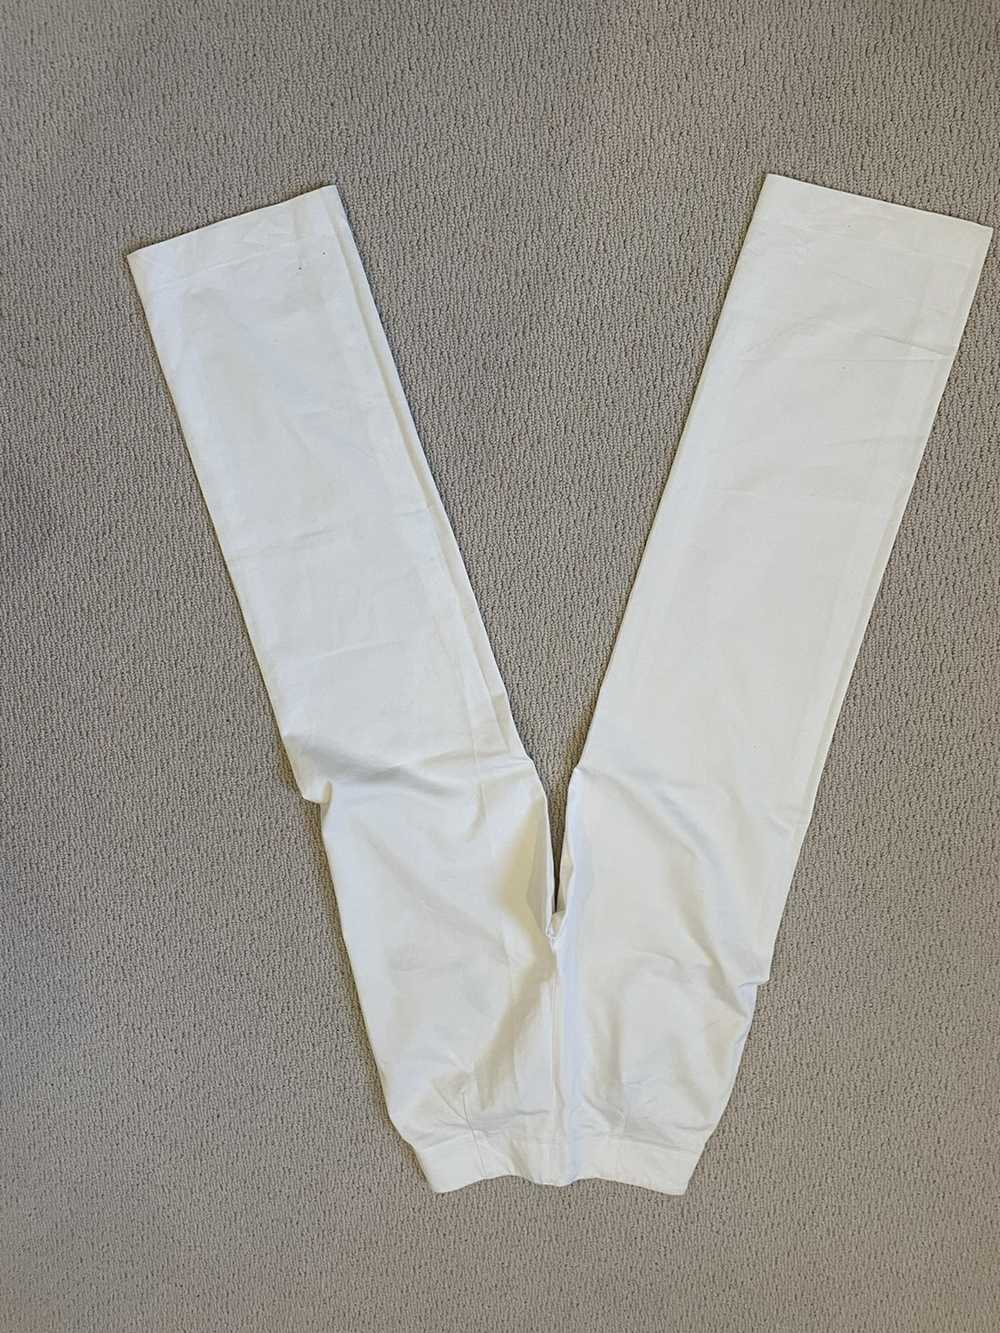 Massimo Dutti Uterque brand pants - image 8